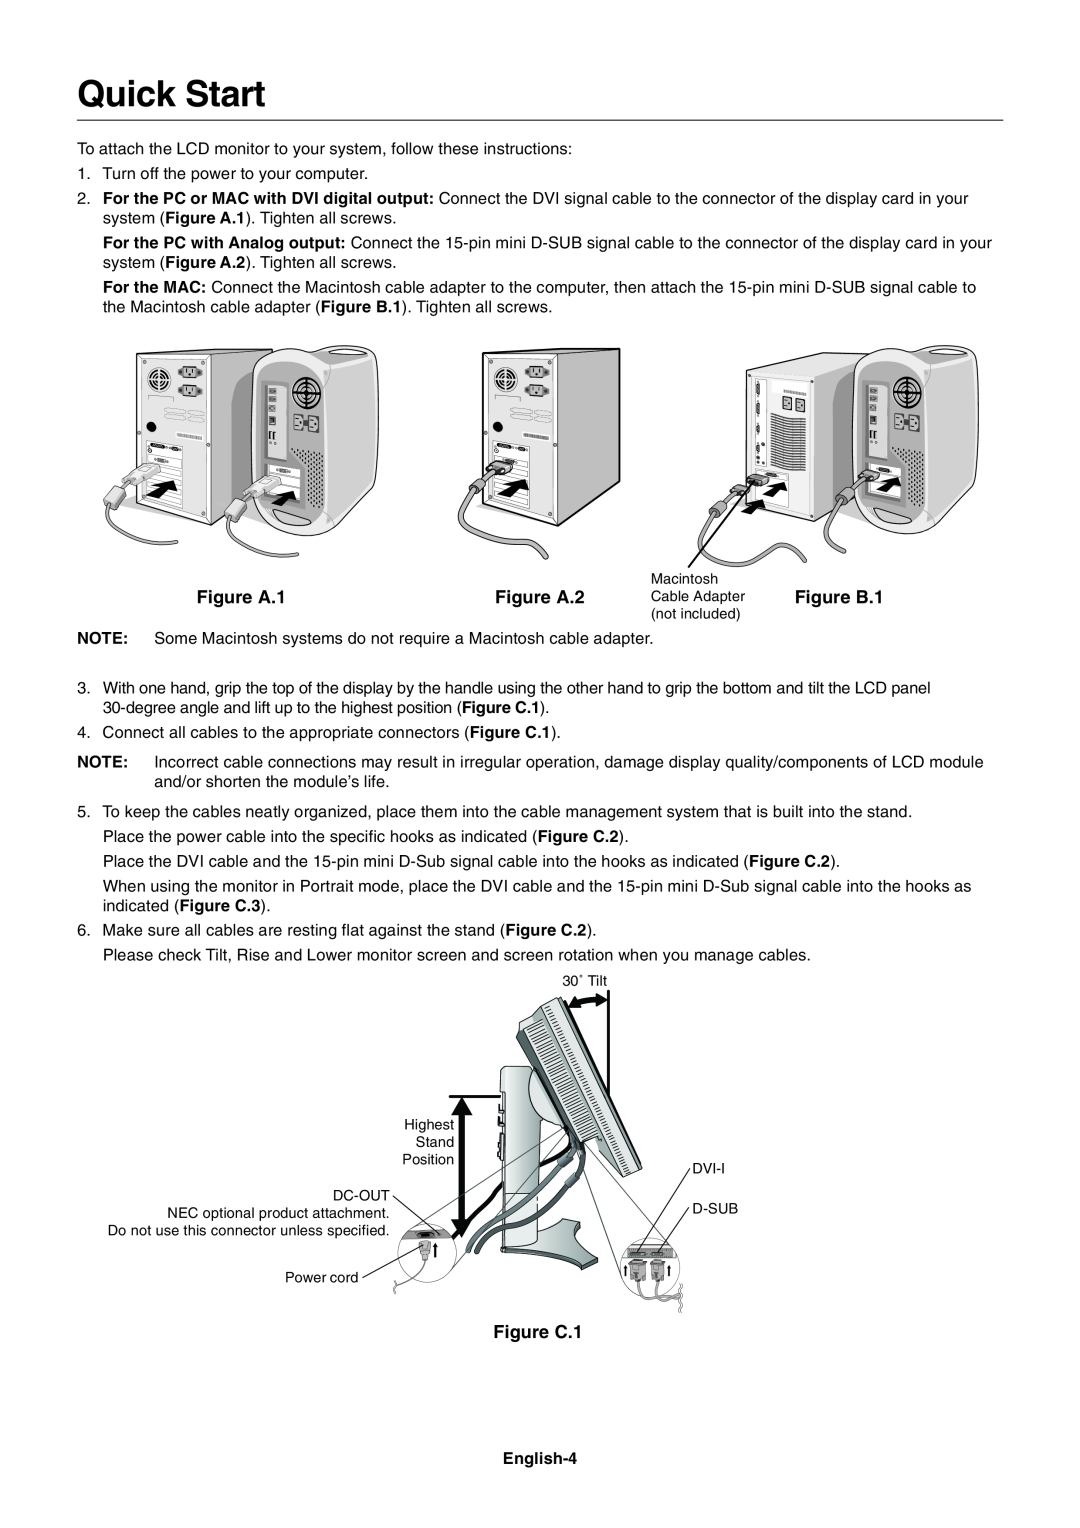 NEC LCD1990FXp user manual Quick Start, Figure A.1, Figure A.2, Figure C.1 